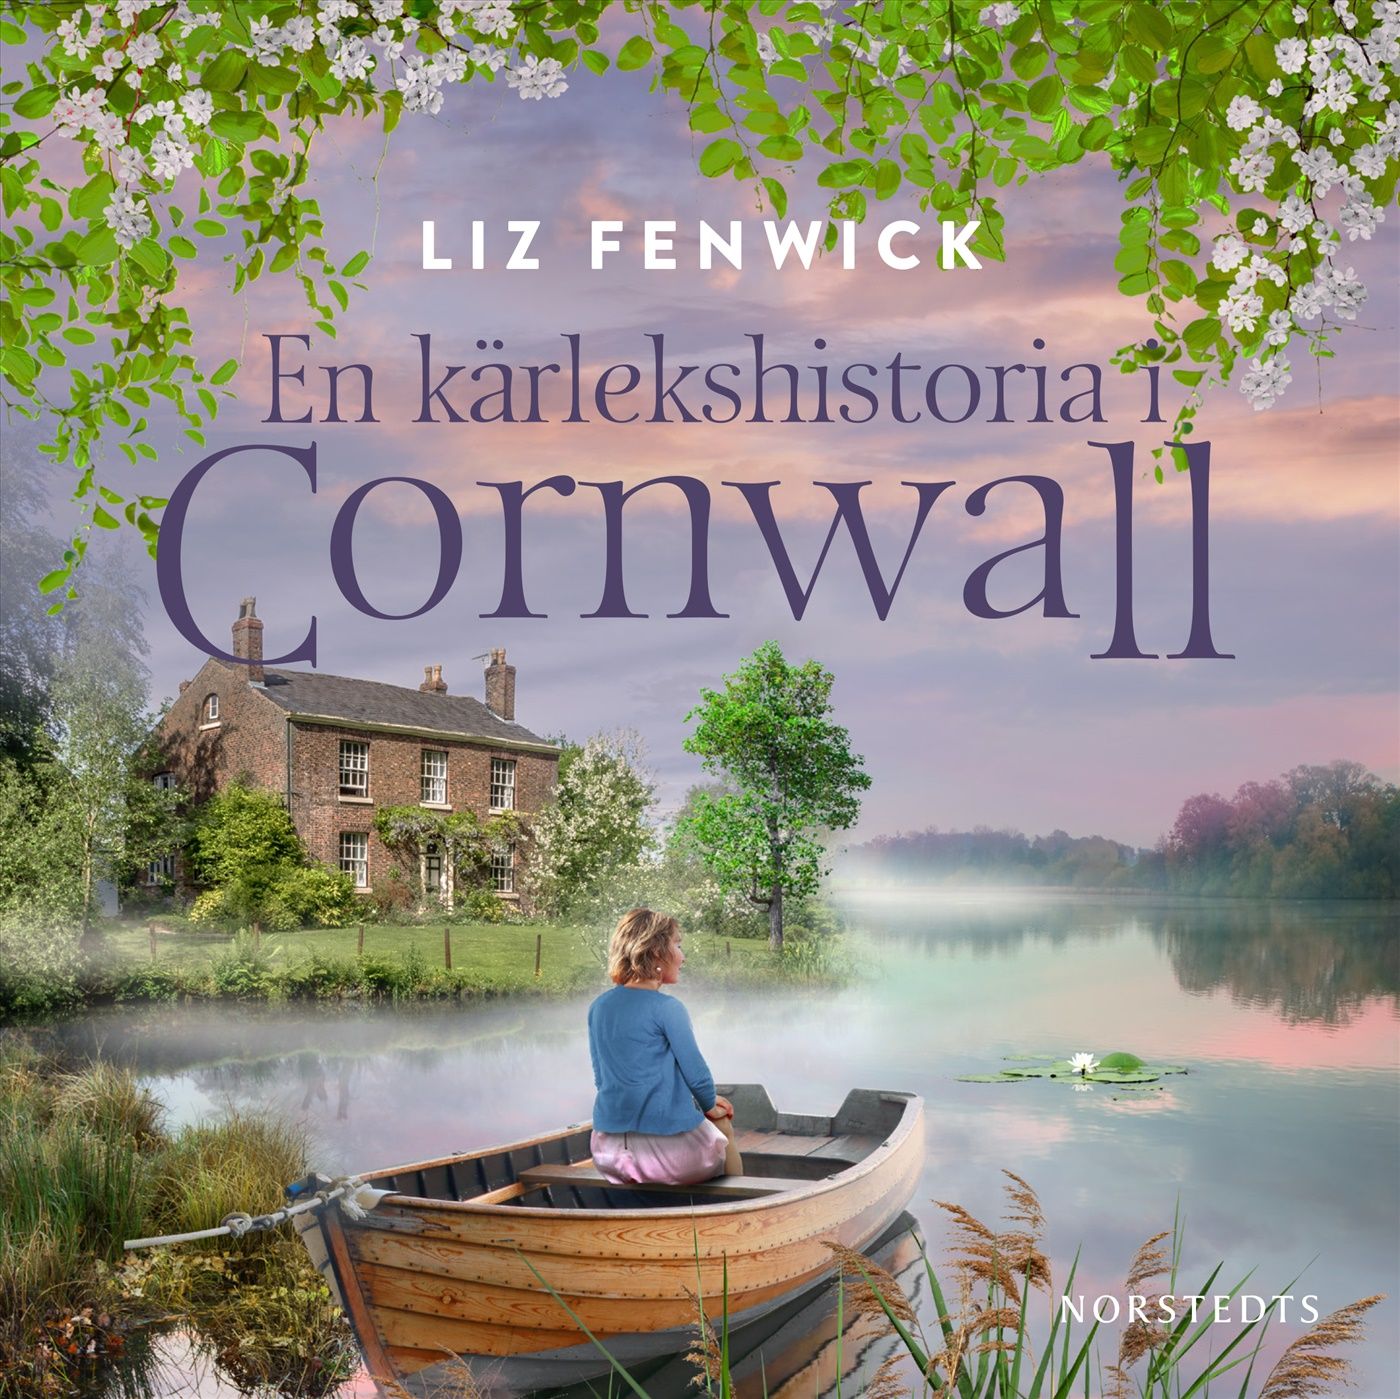 En kärlekshistoria i Cornwall, audiobook by Liz Fenwick